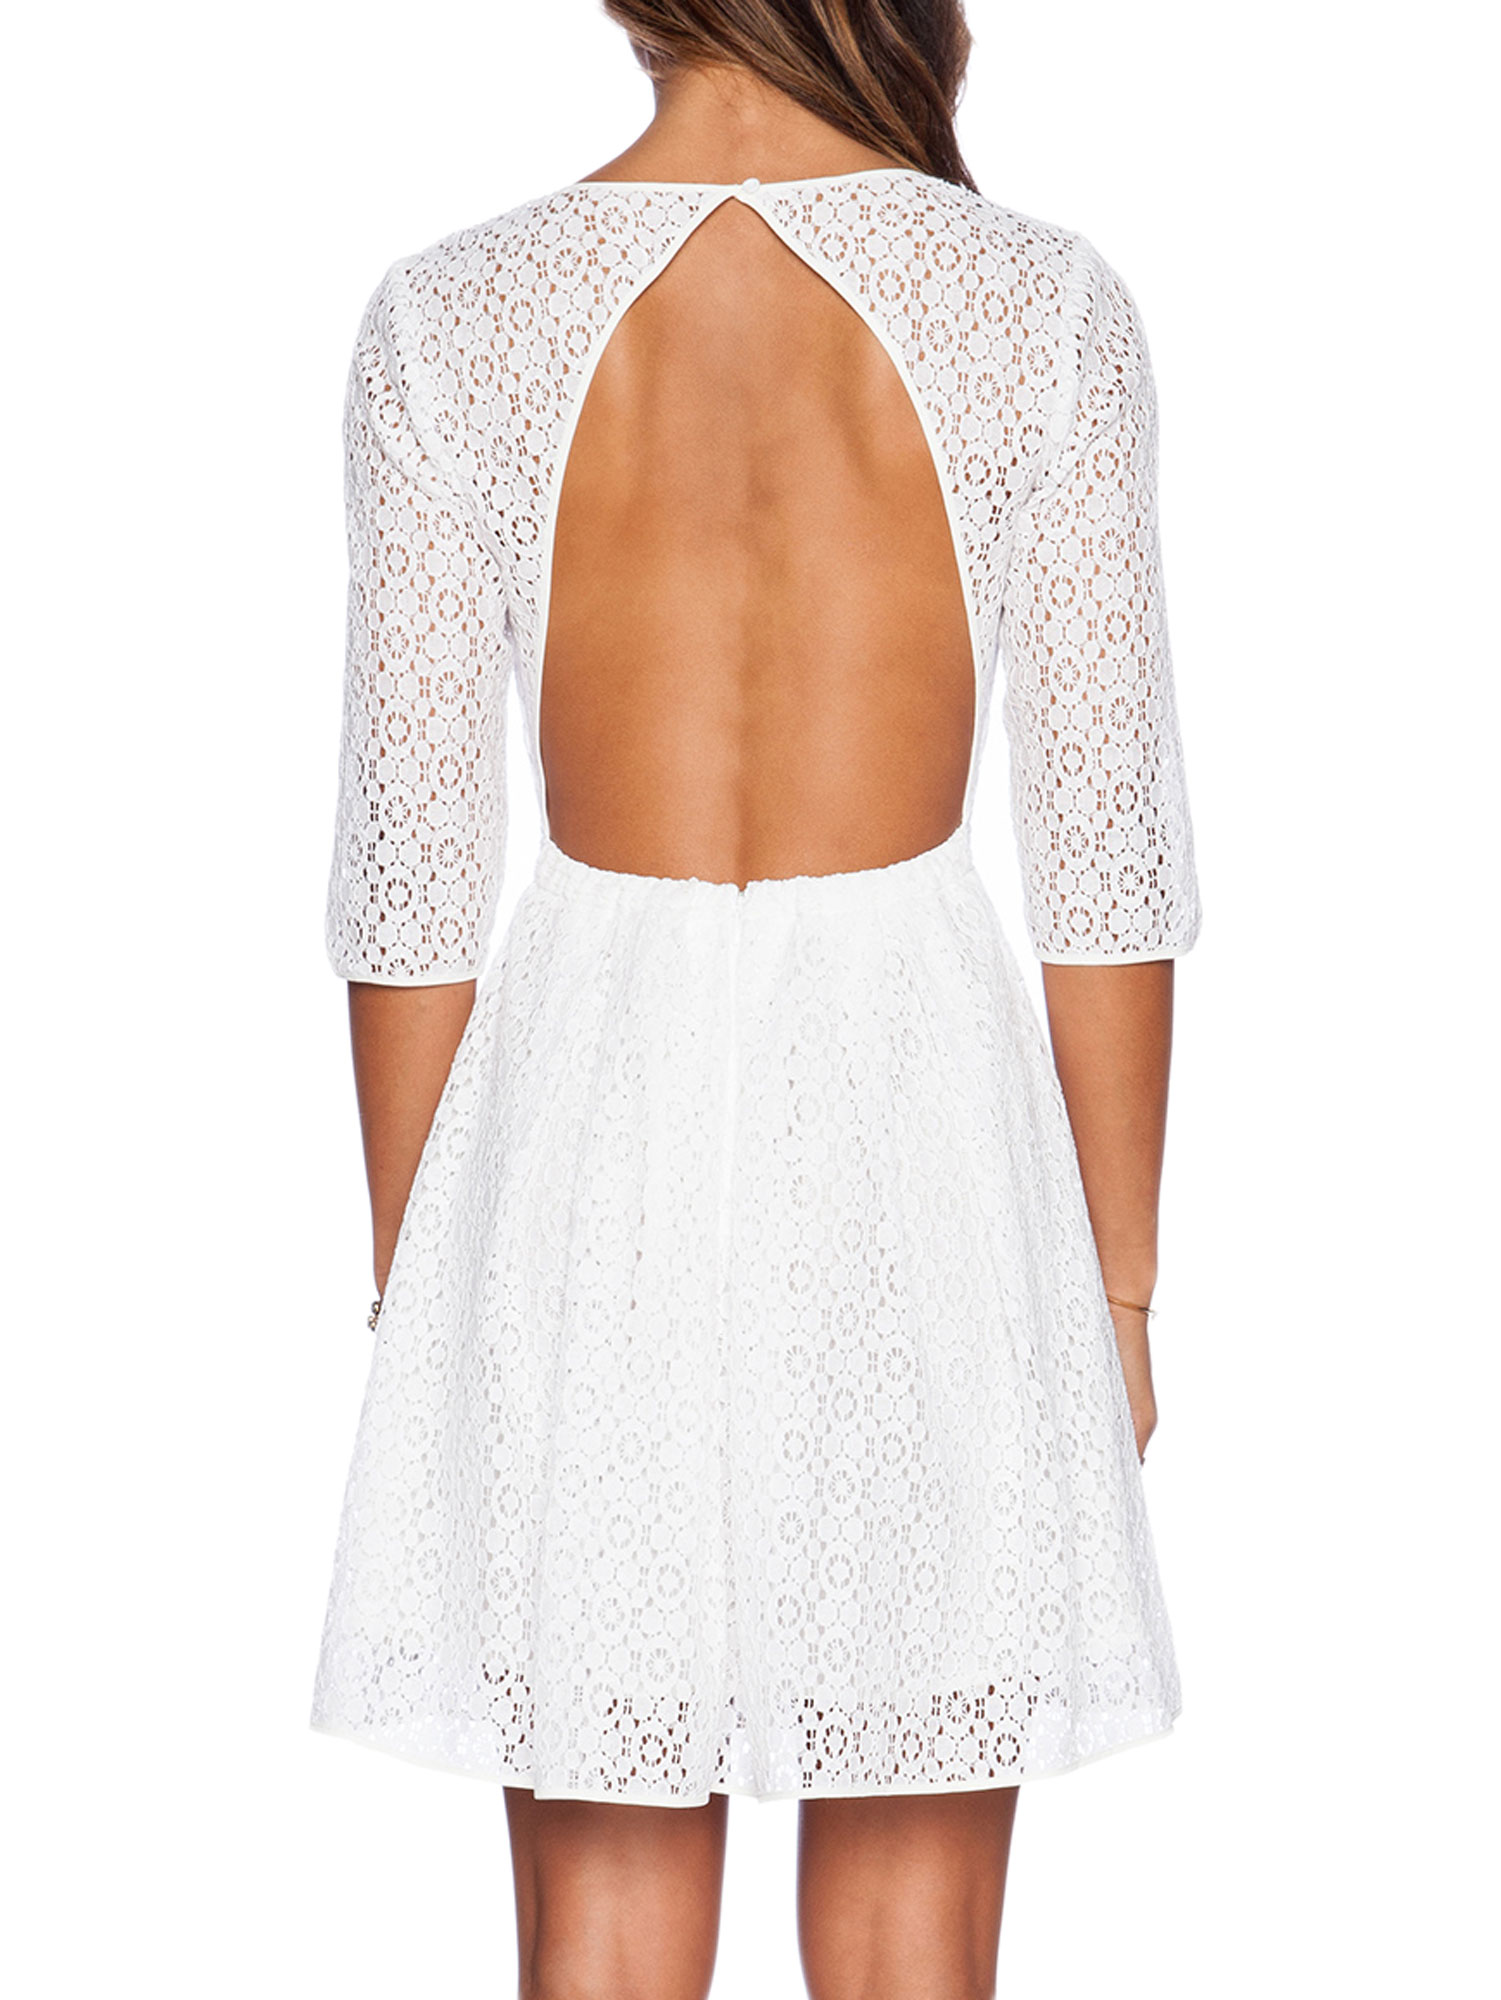 REBECCA MINKOFF Women's White Fit & Flare Lacey Dress $298 NWT | eBay